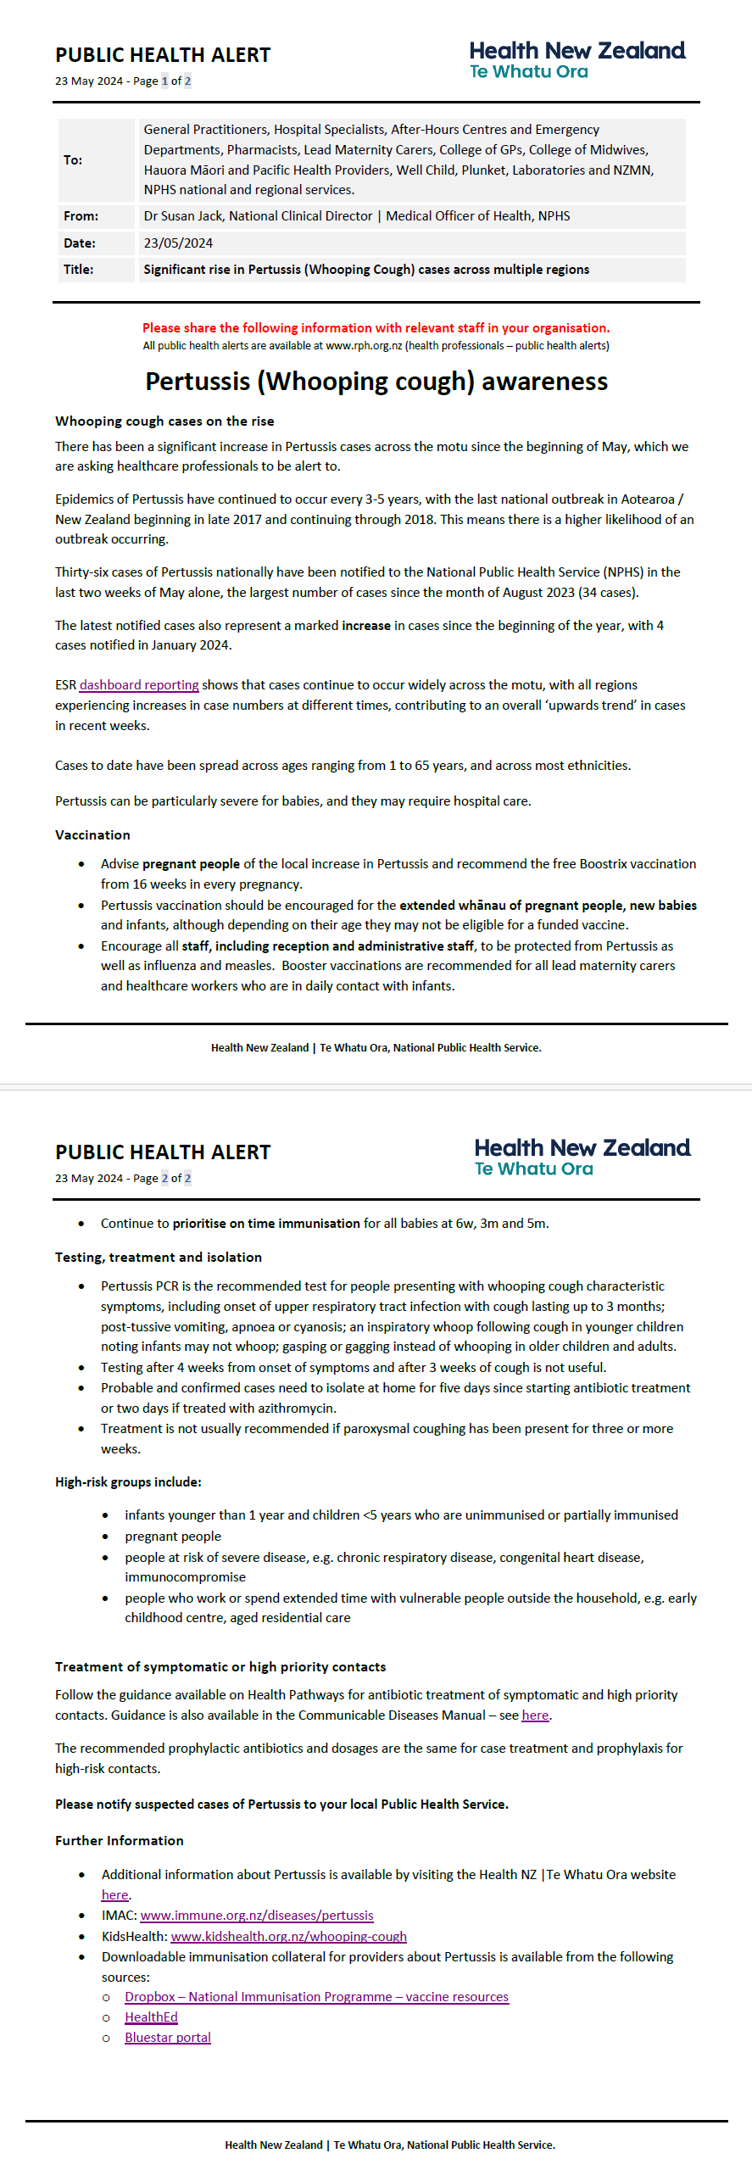 Public Health Alert memo from Health New Zealand